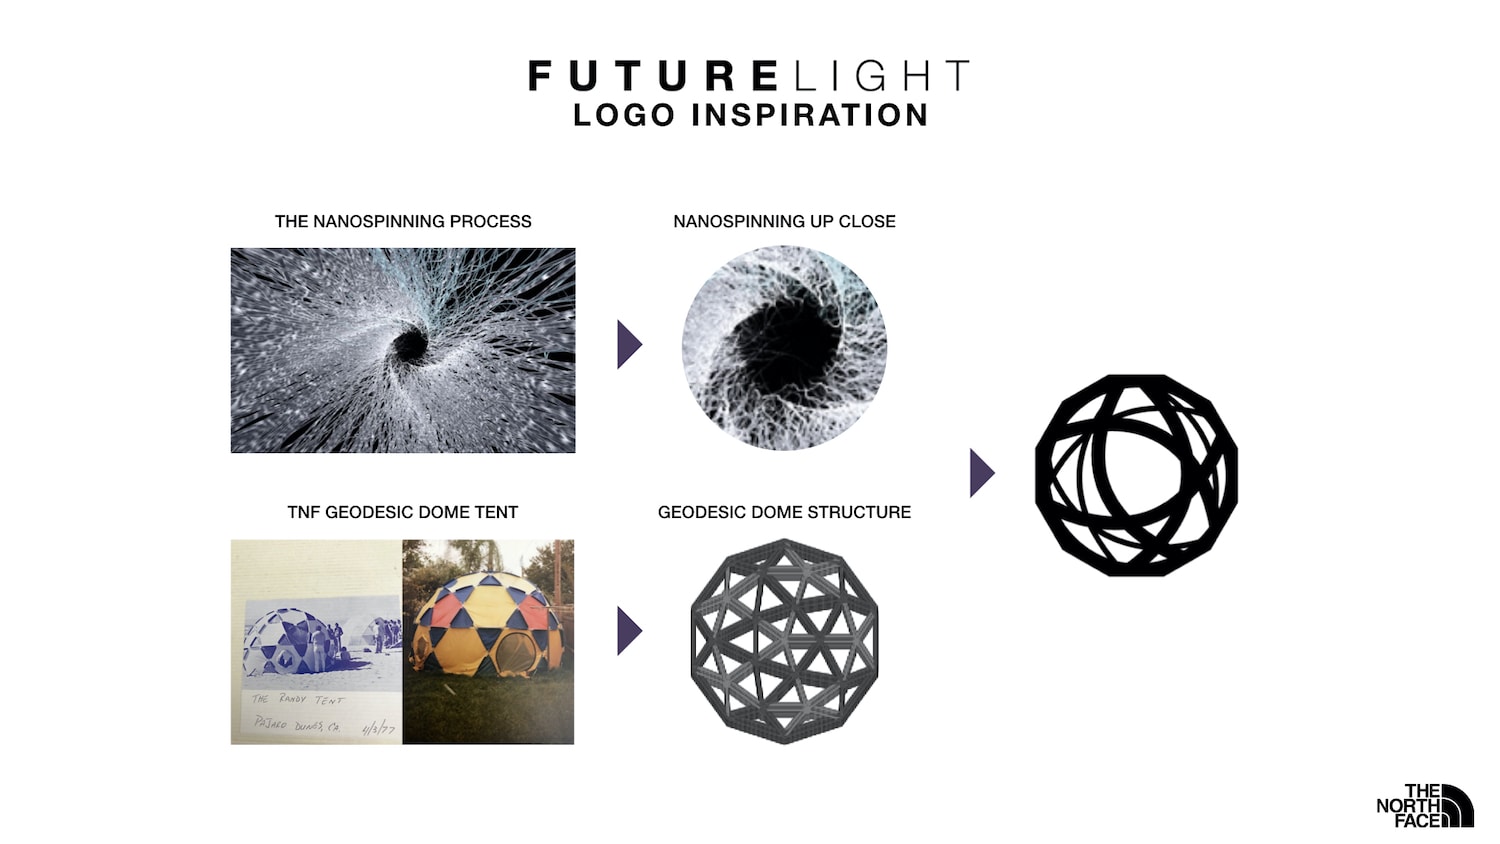 The North Face Futurelight Logo Inspiration